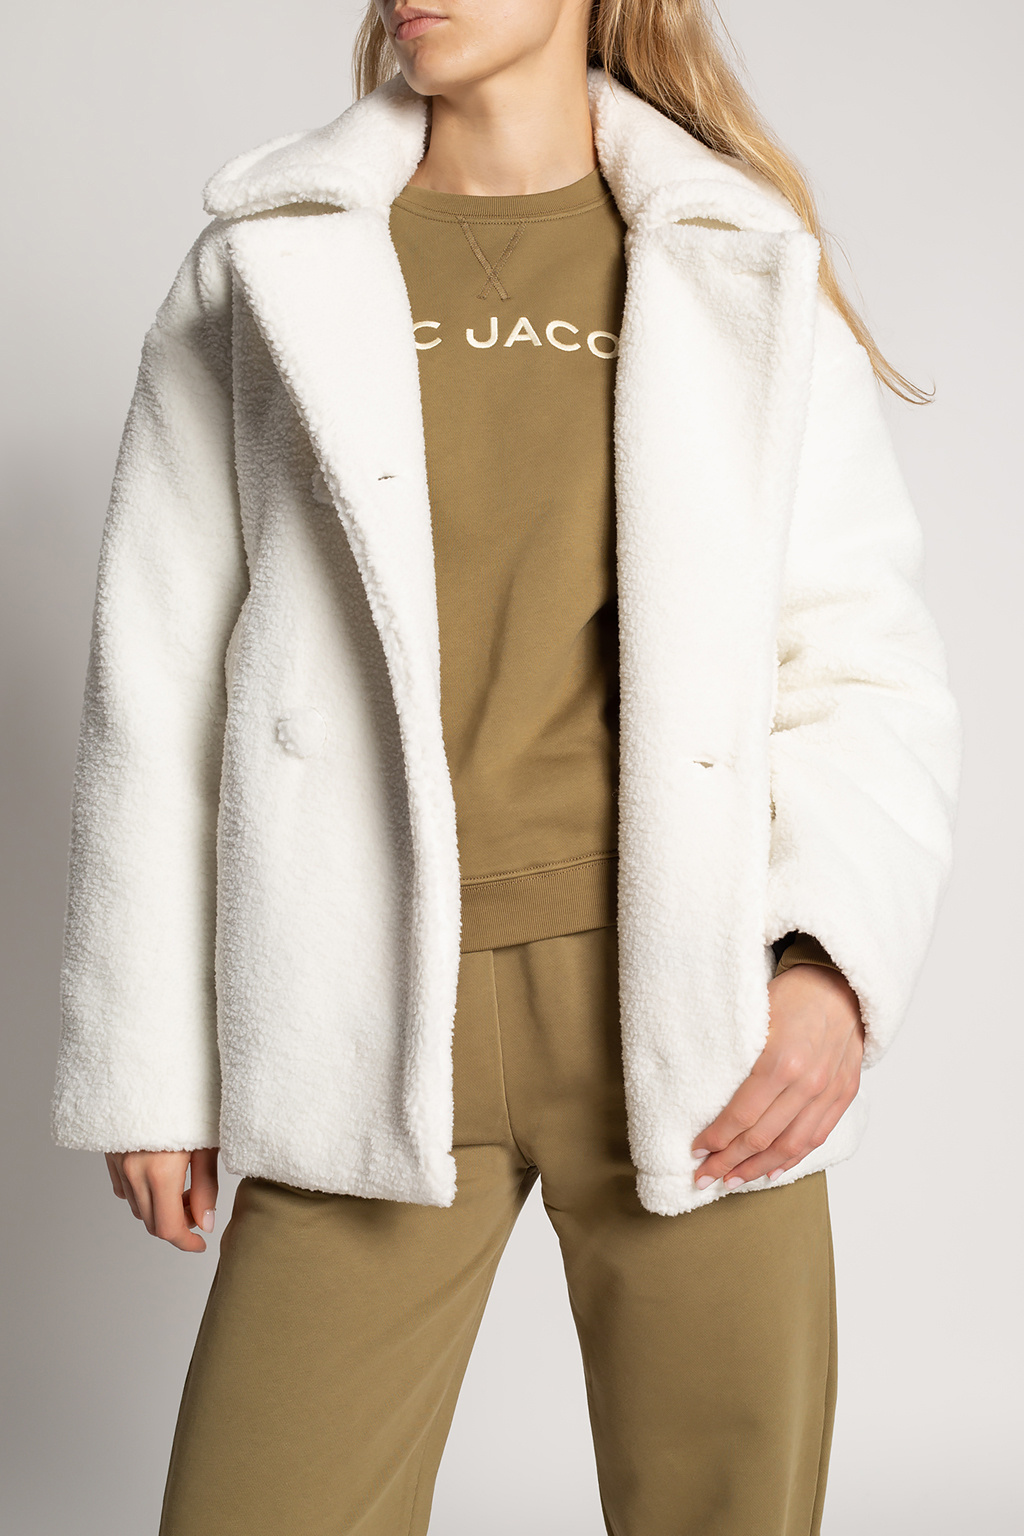 Proenza Schouler White Label Fur coat